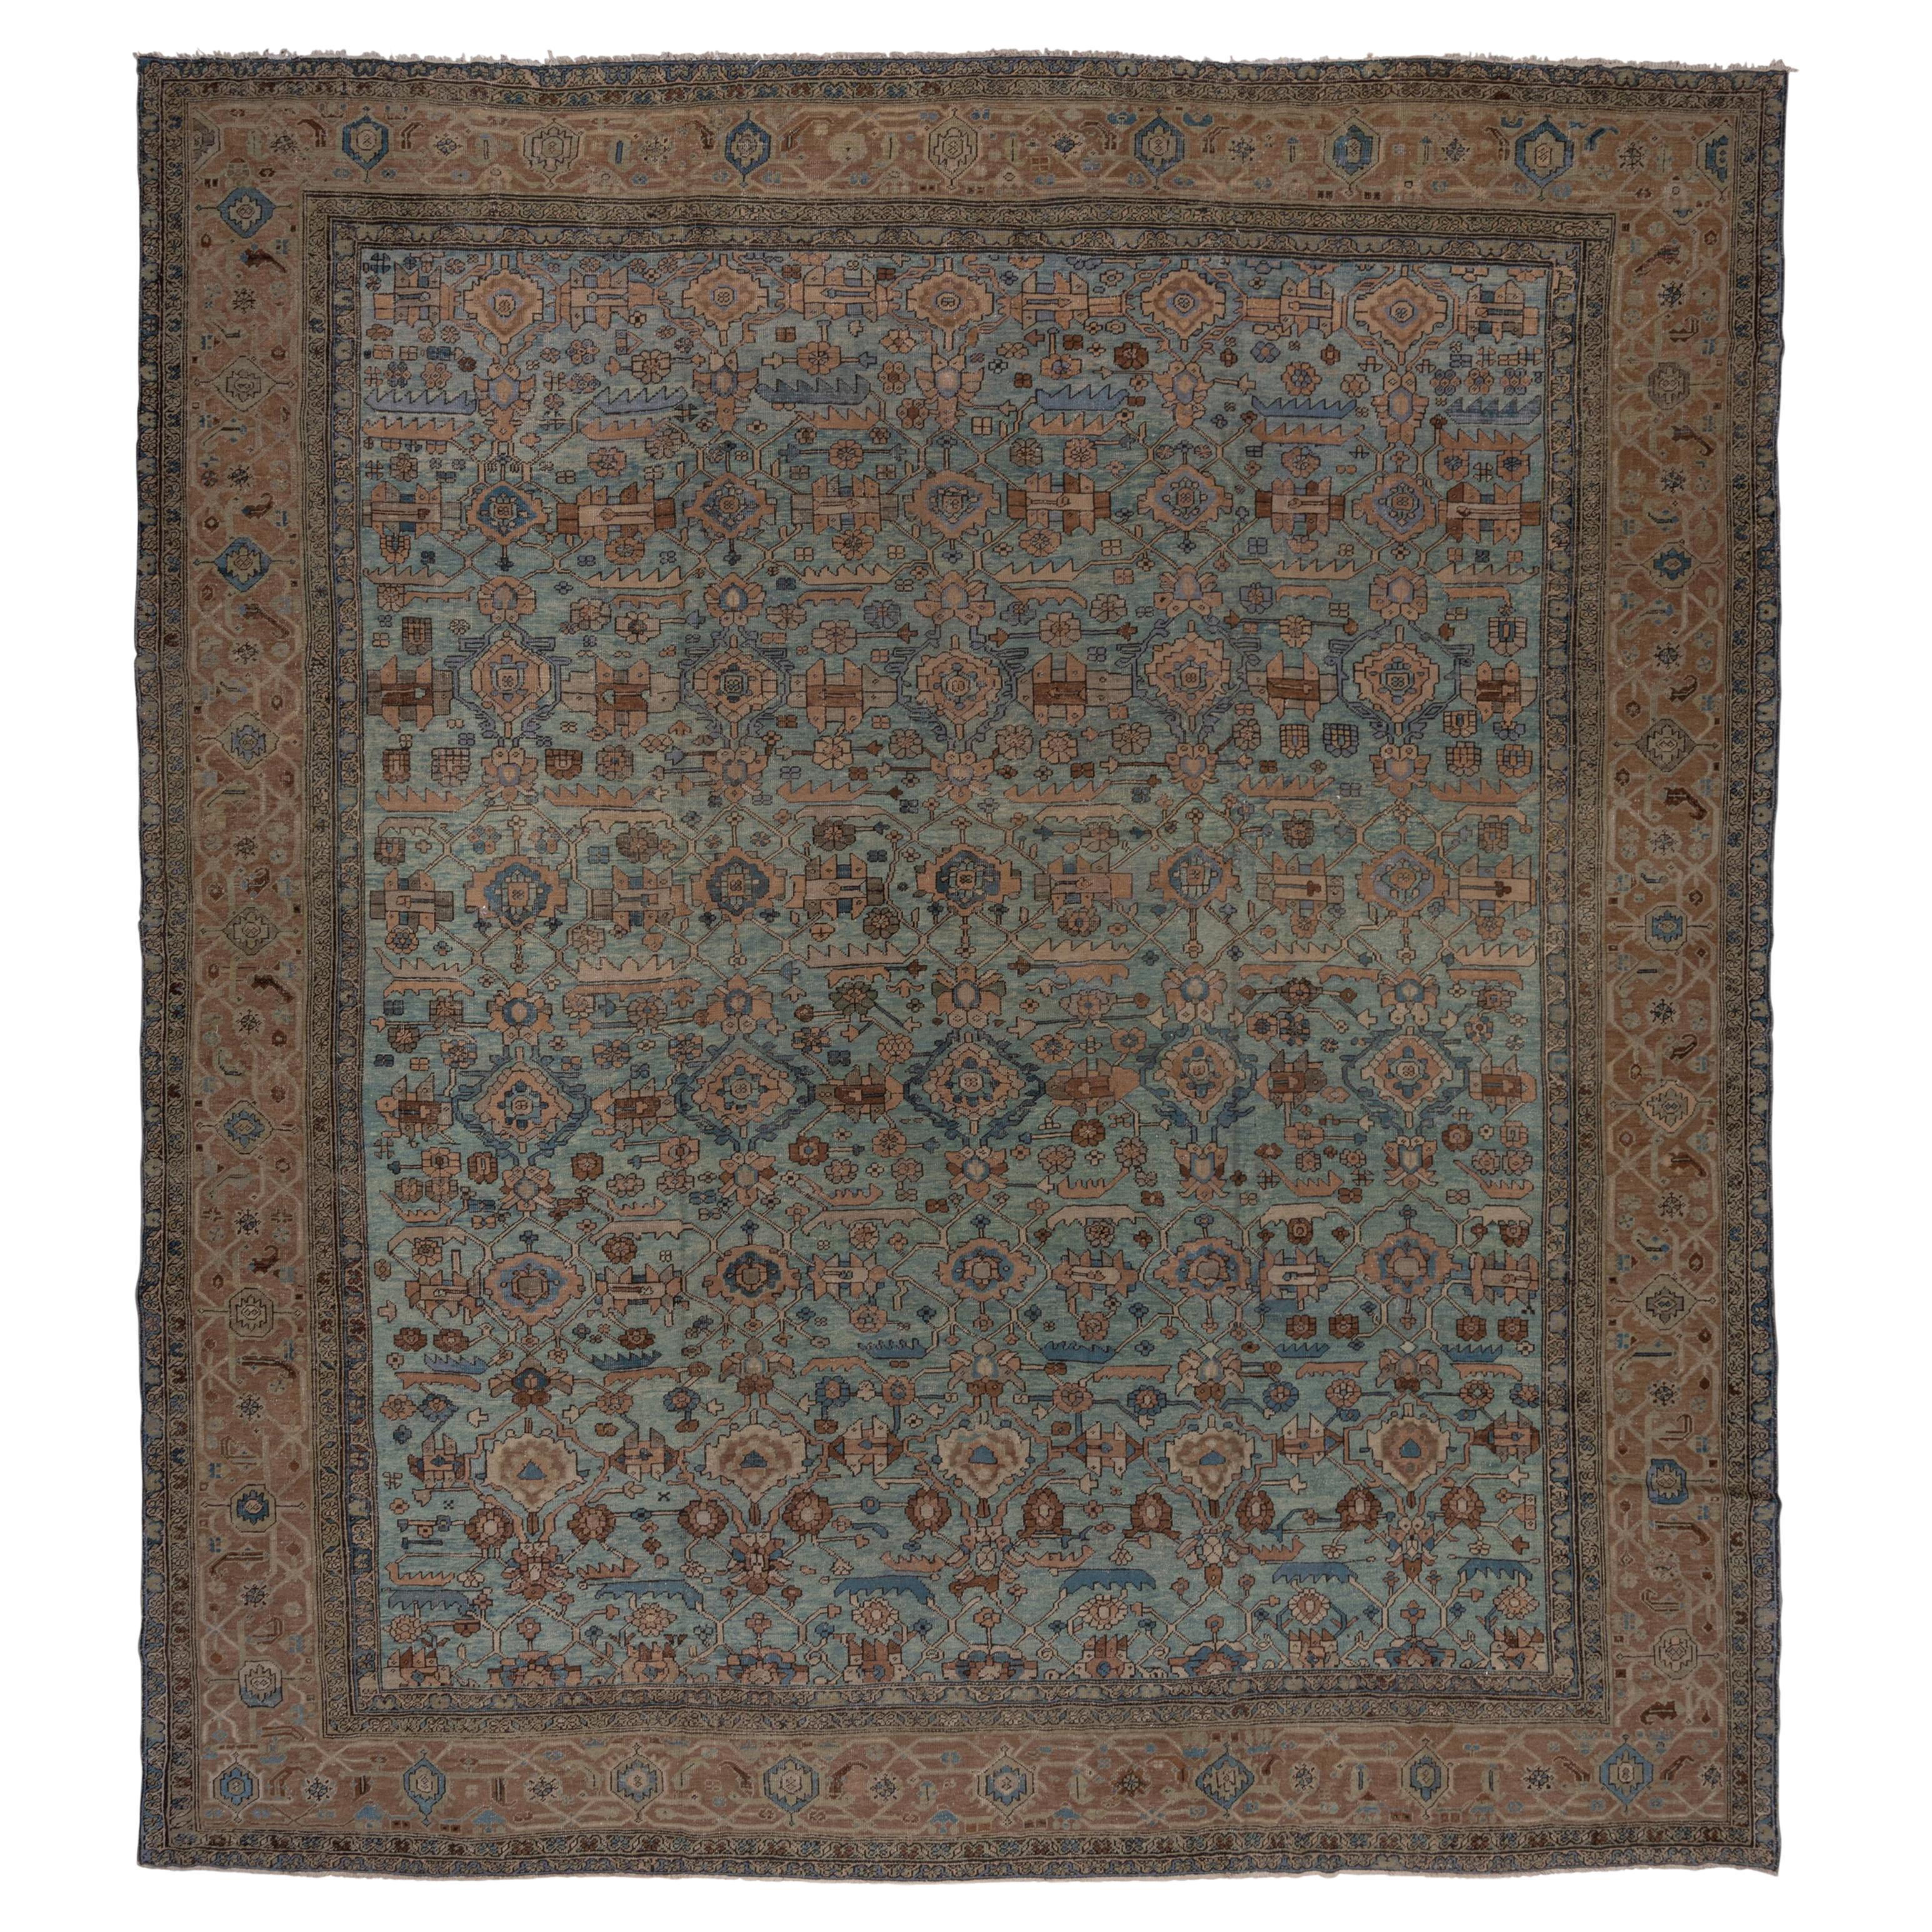 Antique Square Heriz Carpet, Oversized, circa 1900s For Sale